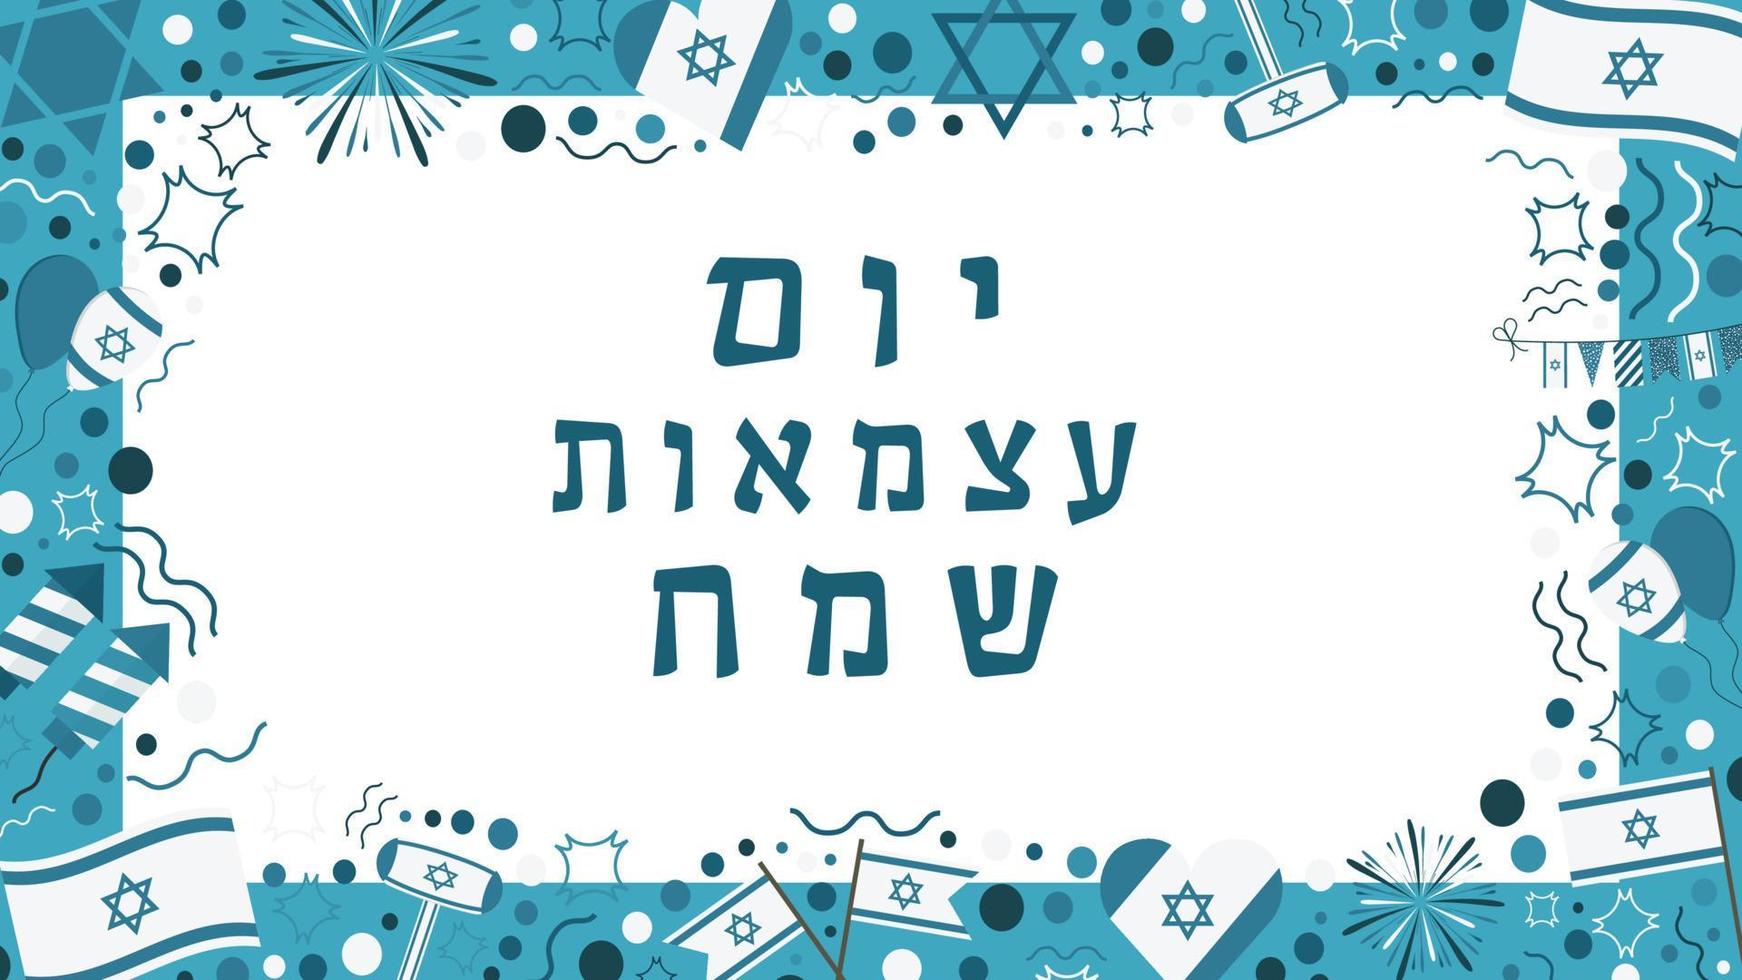 cadre avec des icônes du design plat de vacances de la fête de l'indépendance d'israël avec du texte en hébreu vecteur